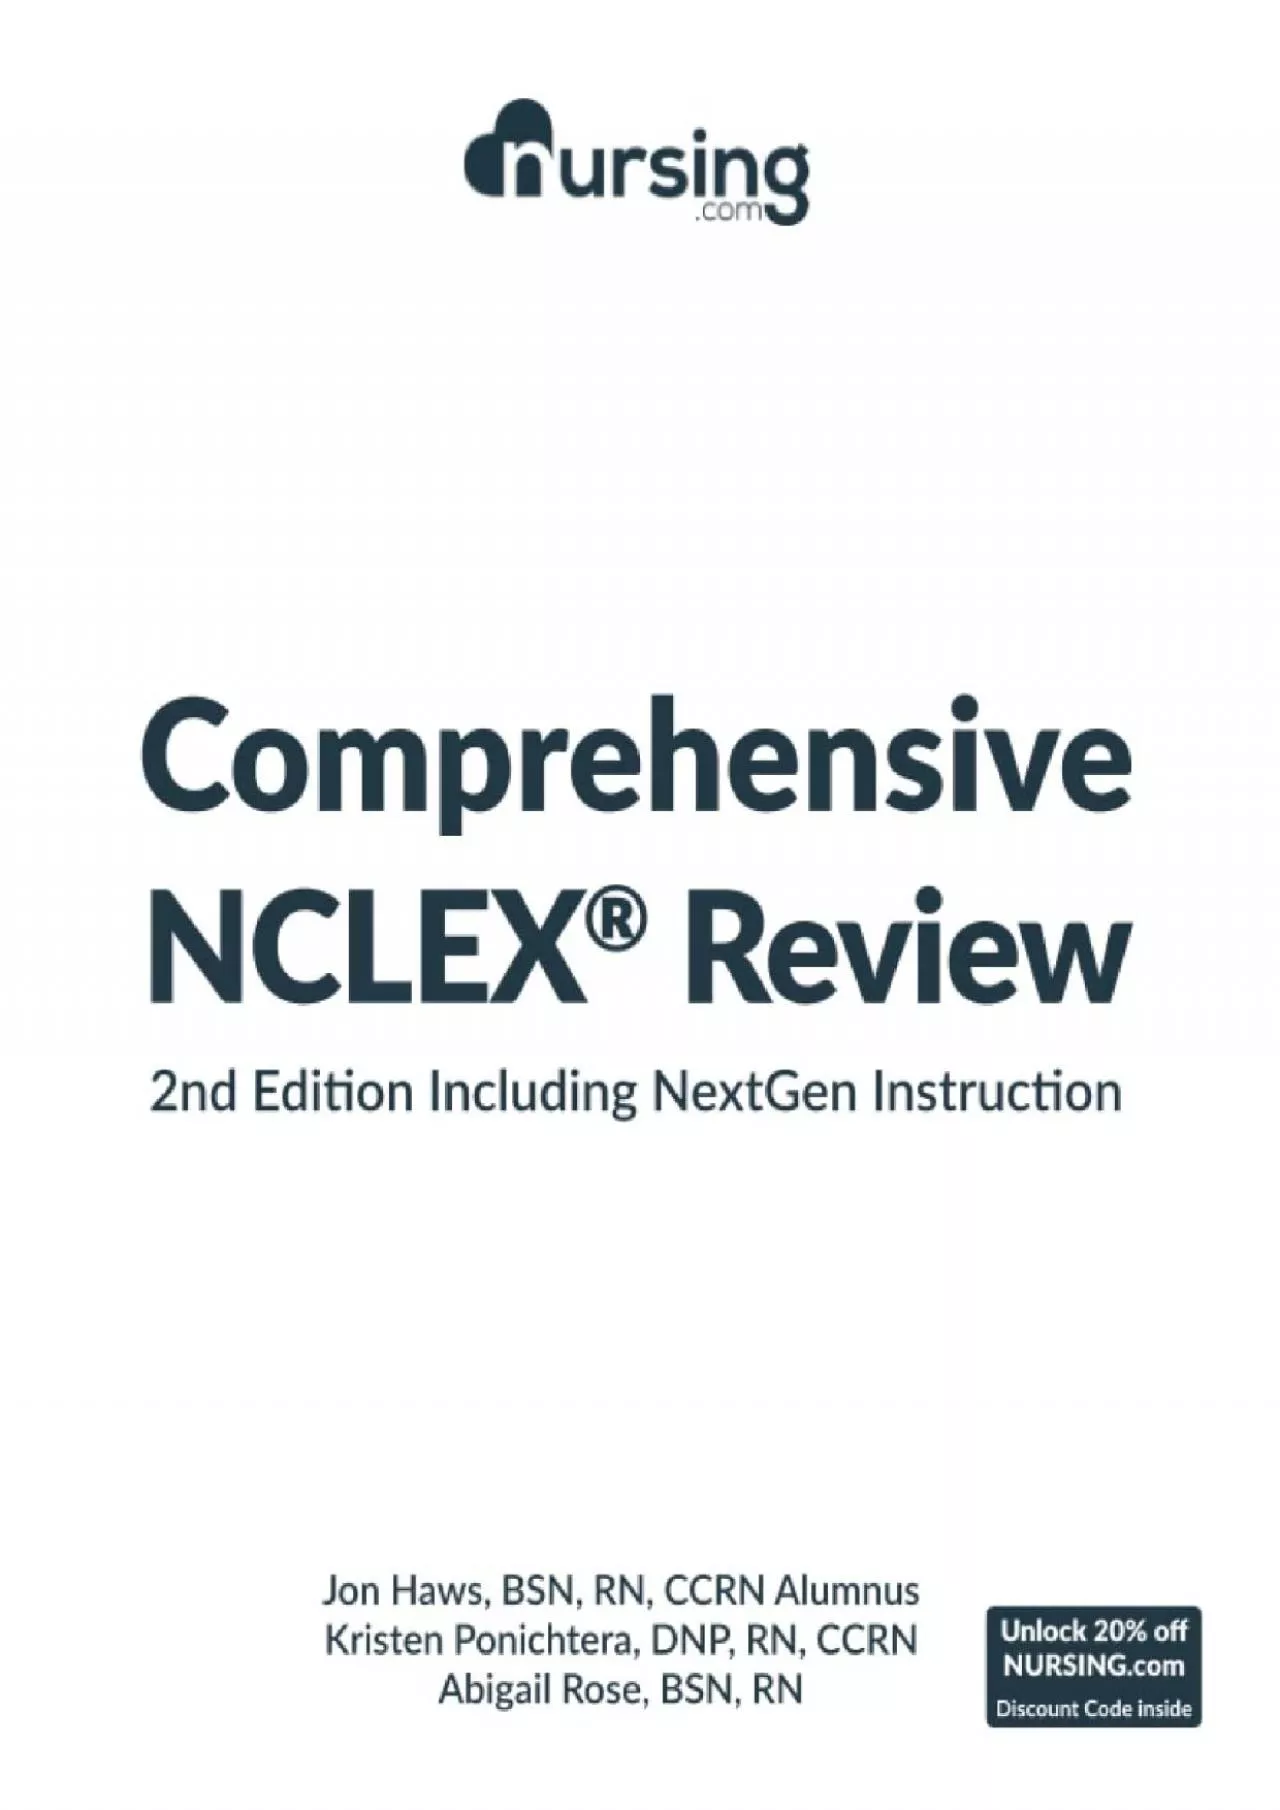 [EBOOK] NURSING.com Comprehensive NCLEX® Review Book: Includes NextGen Content and Complete